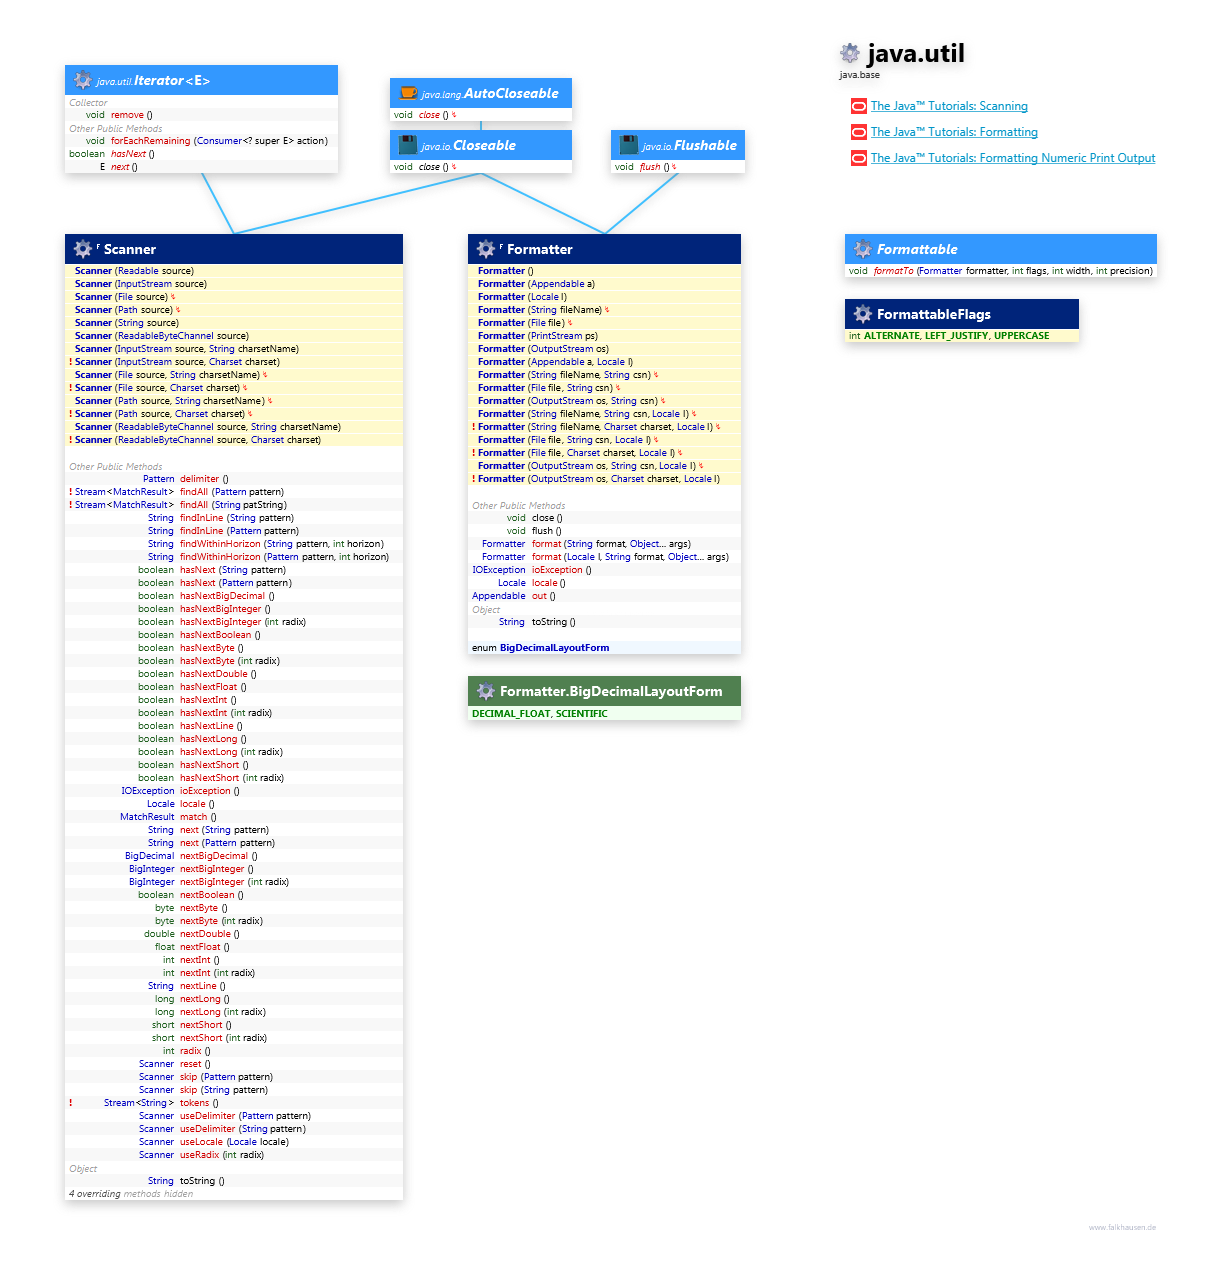 java.util Scanner, Formatter class diagram and api documentation for Java 10